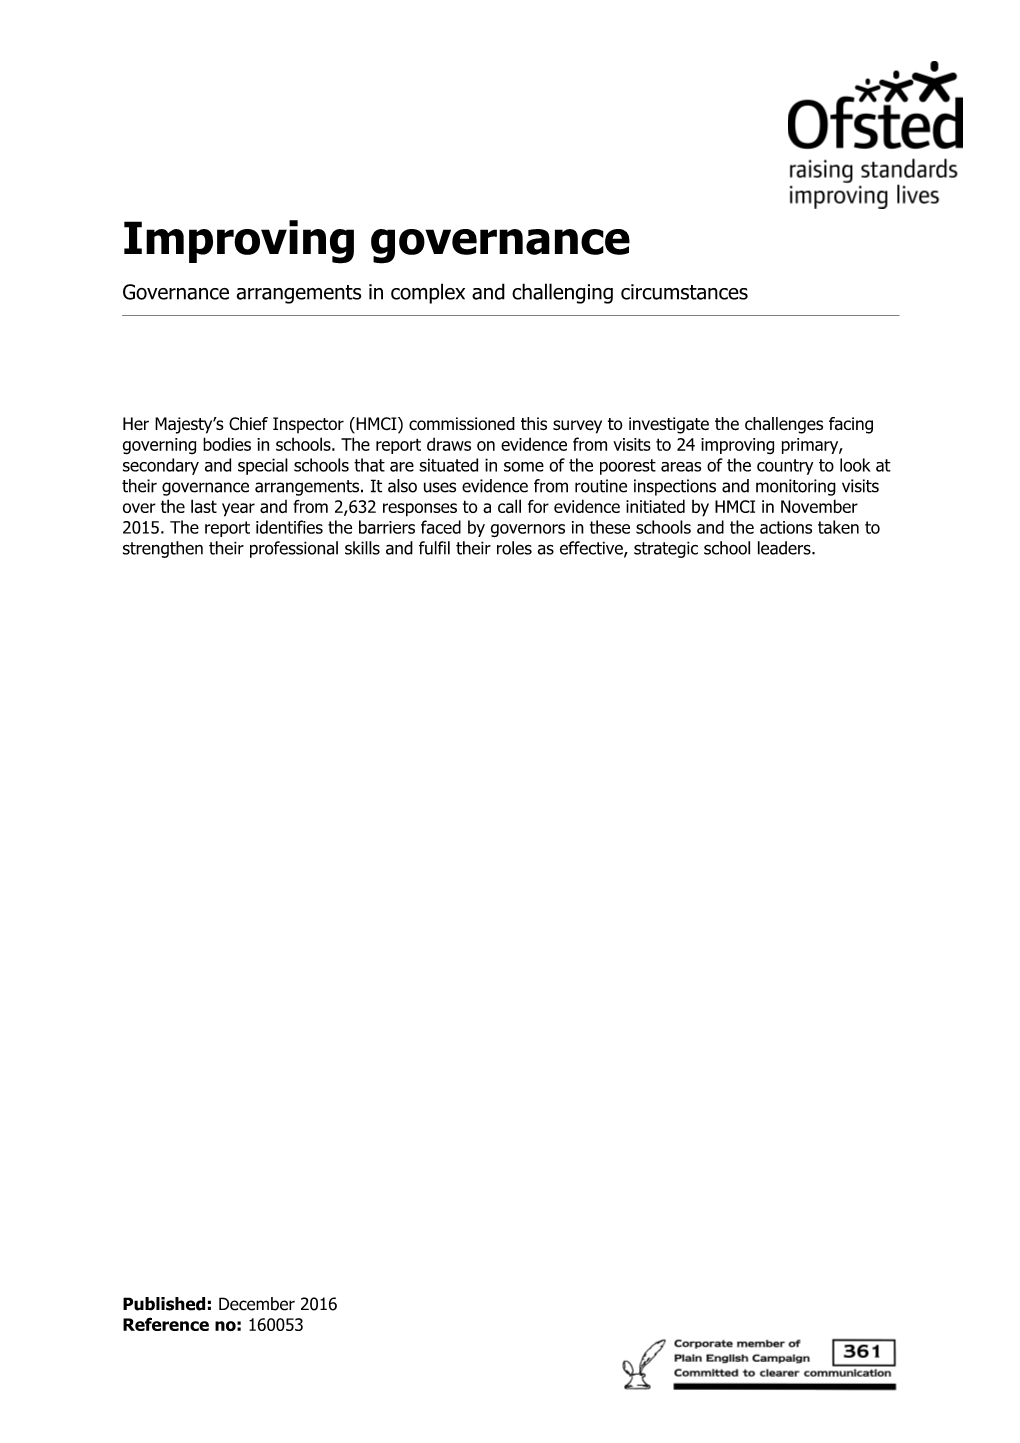 Governance Arrangements in Complex and Challenging Circumstances